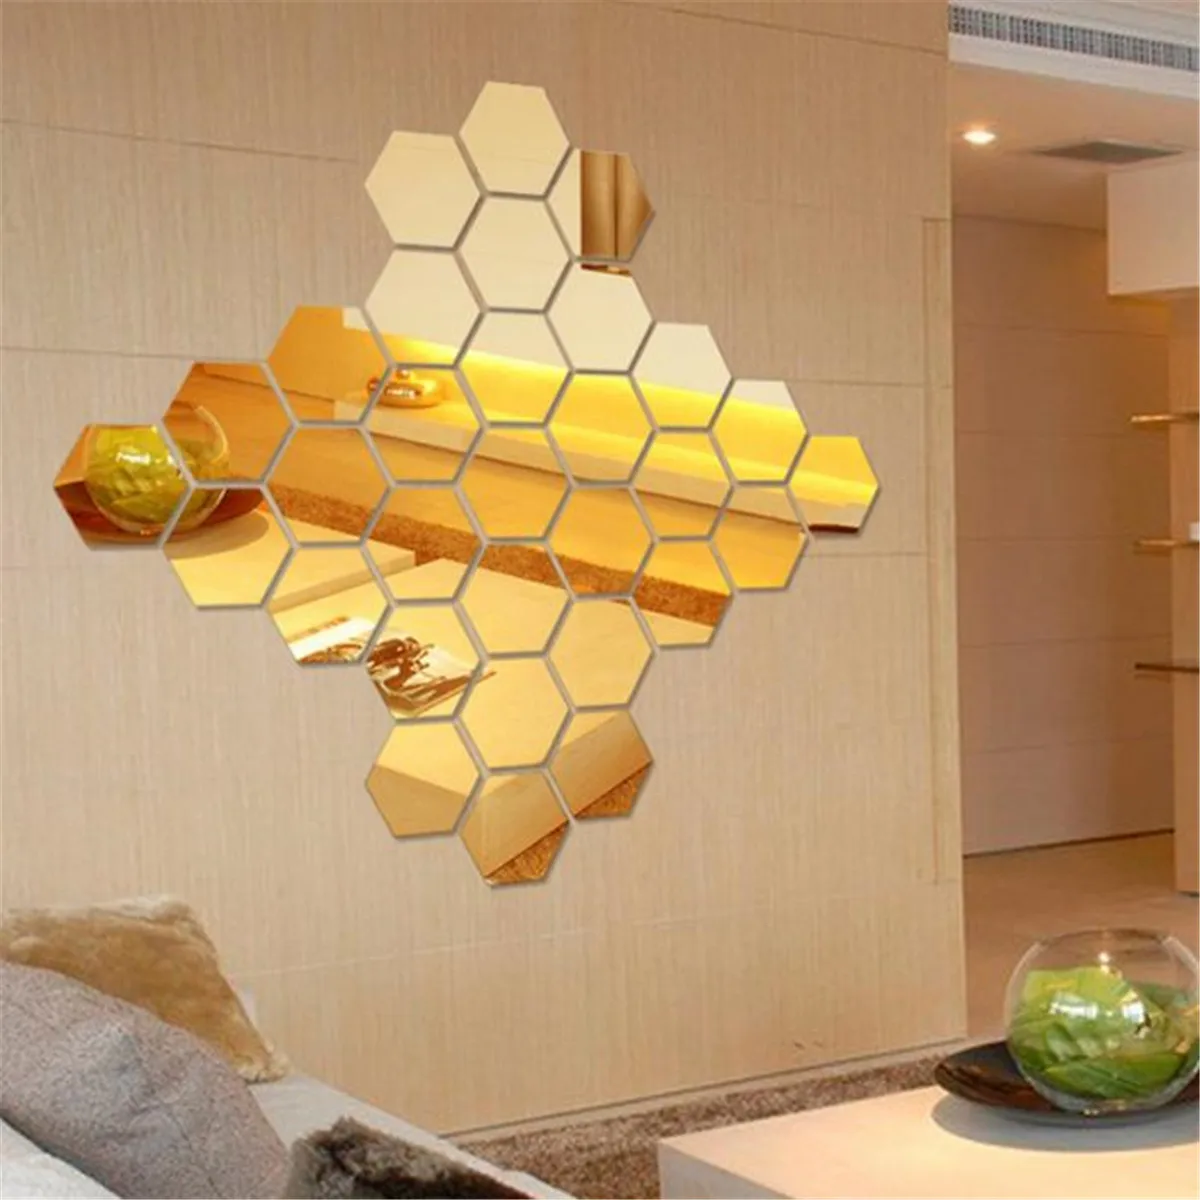 6/12pcs 3D Mirror Wall Sticker Hexagon Decal Home Decor DIY Self-adhesive Mirror Decor Stickers Art Wall Decoration 126mm Large